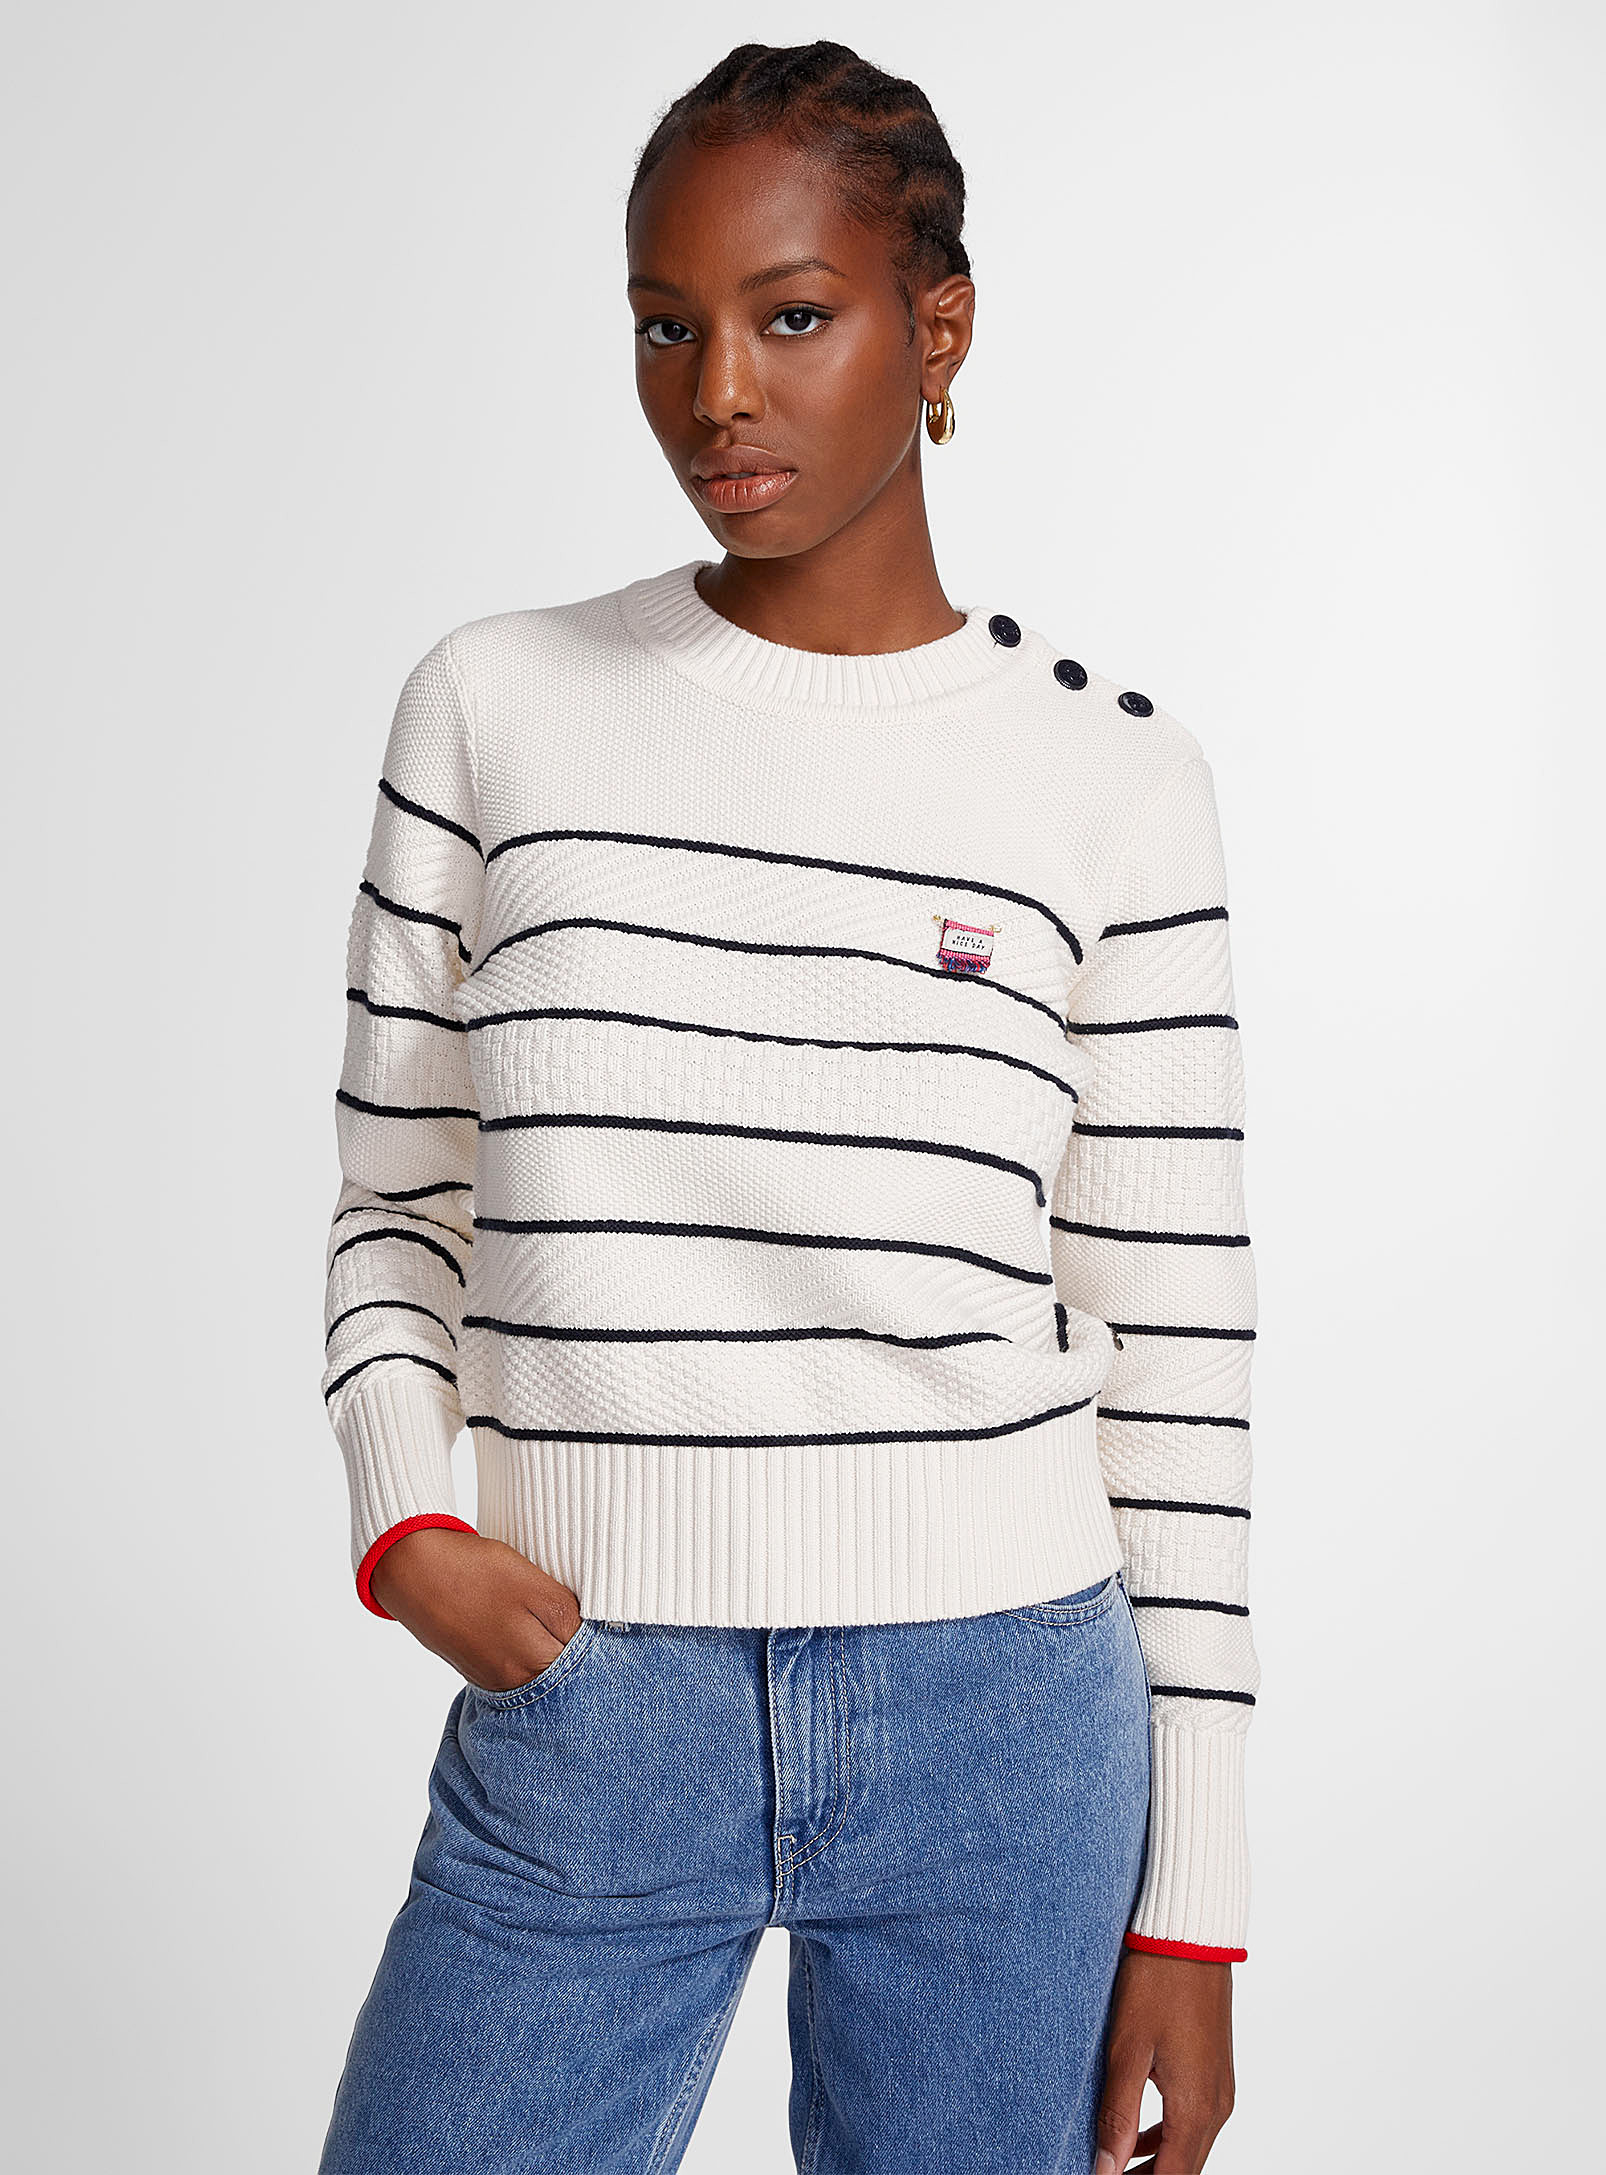 Scotch & Soda - Women's Moss stich knit striped sweater